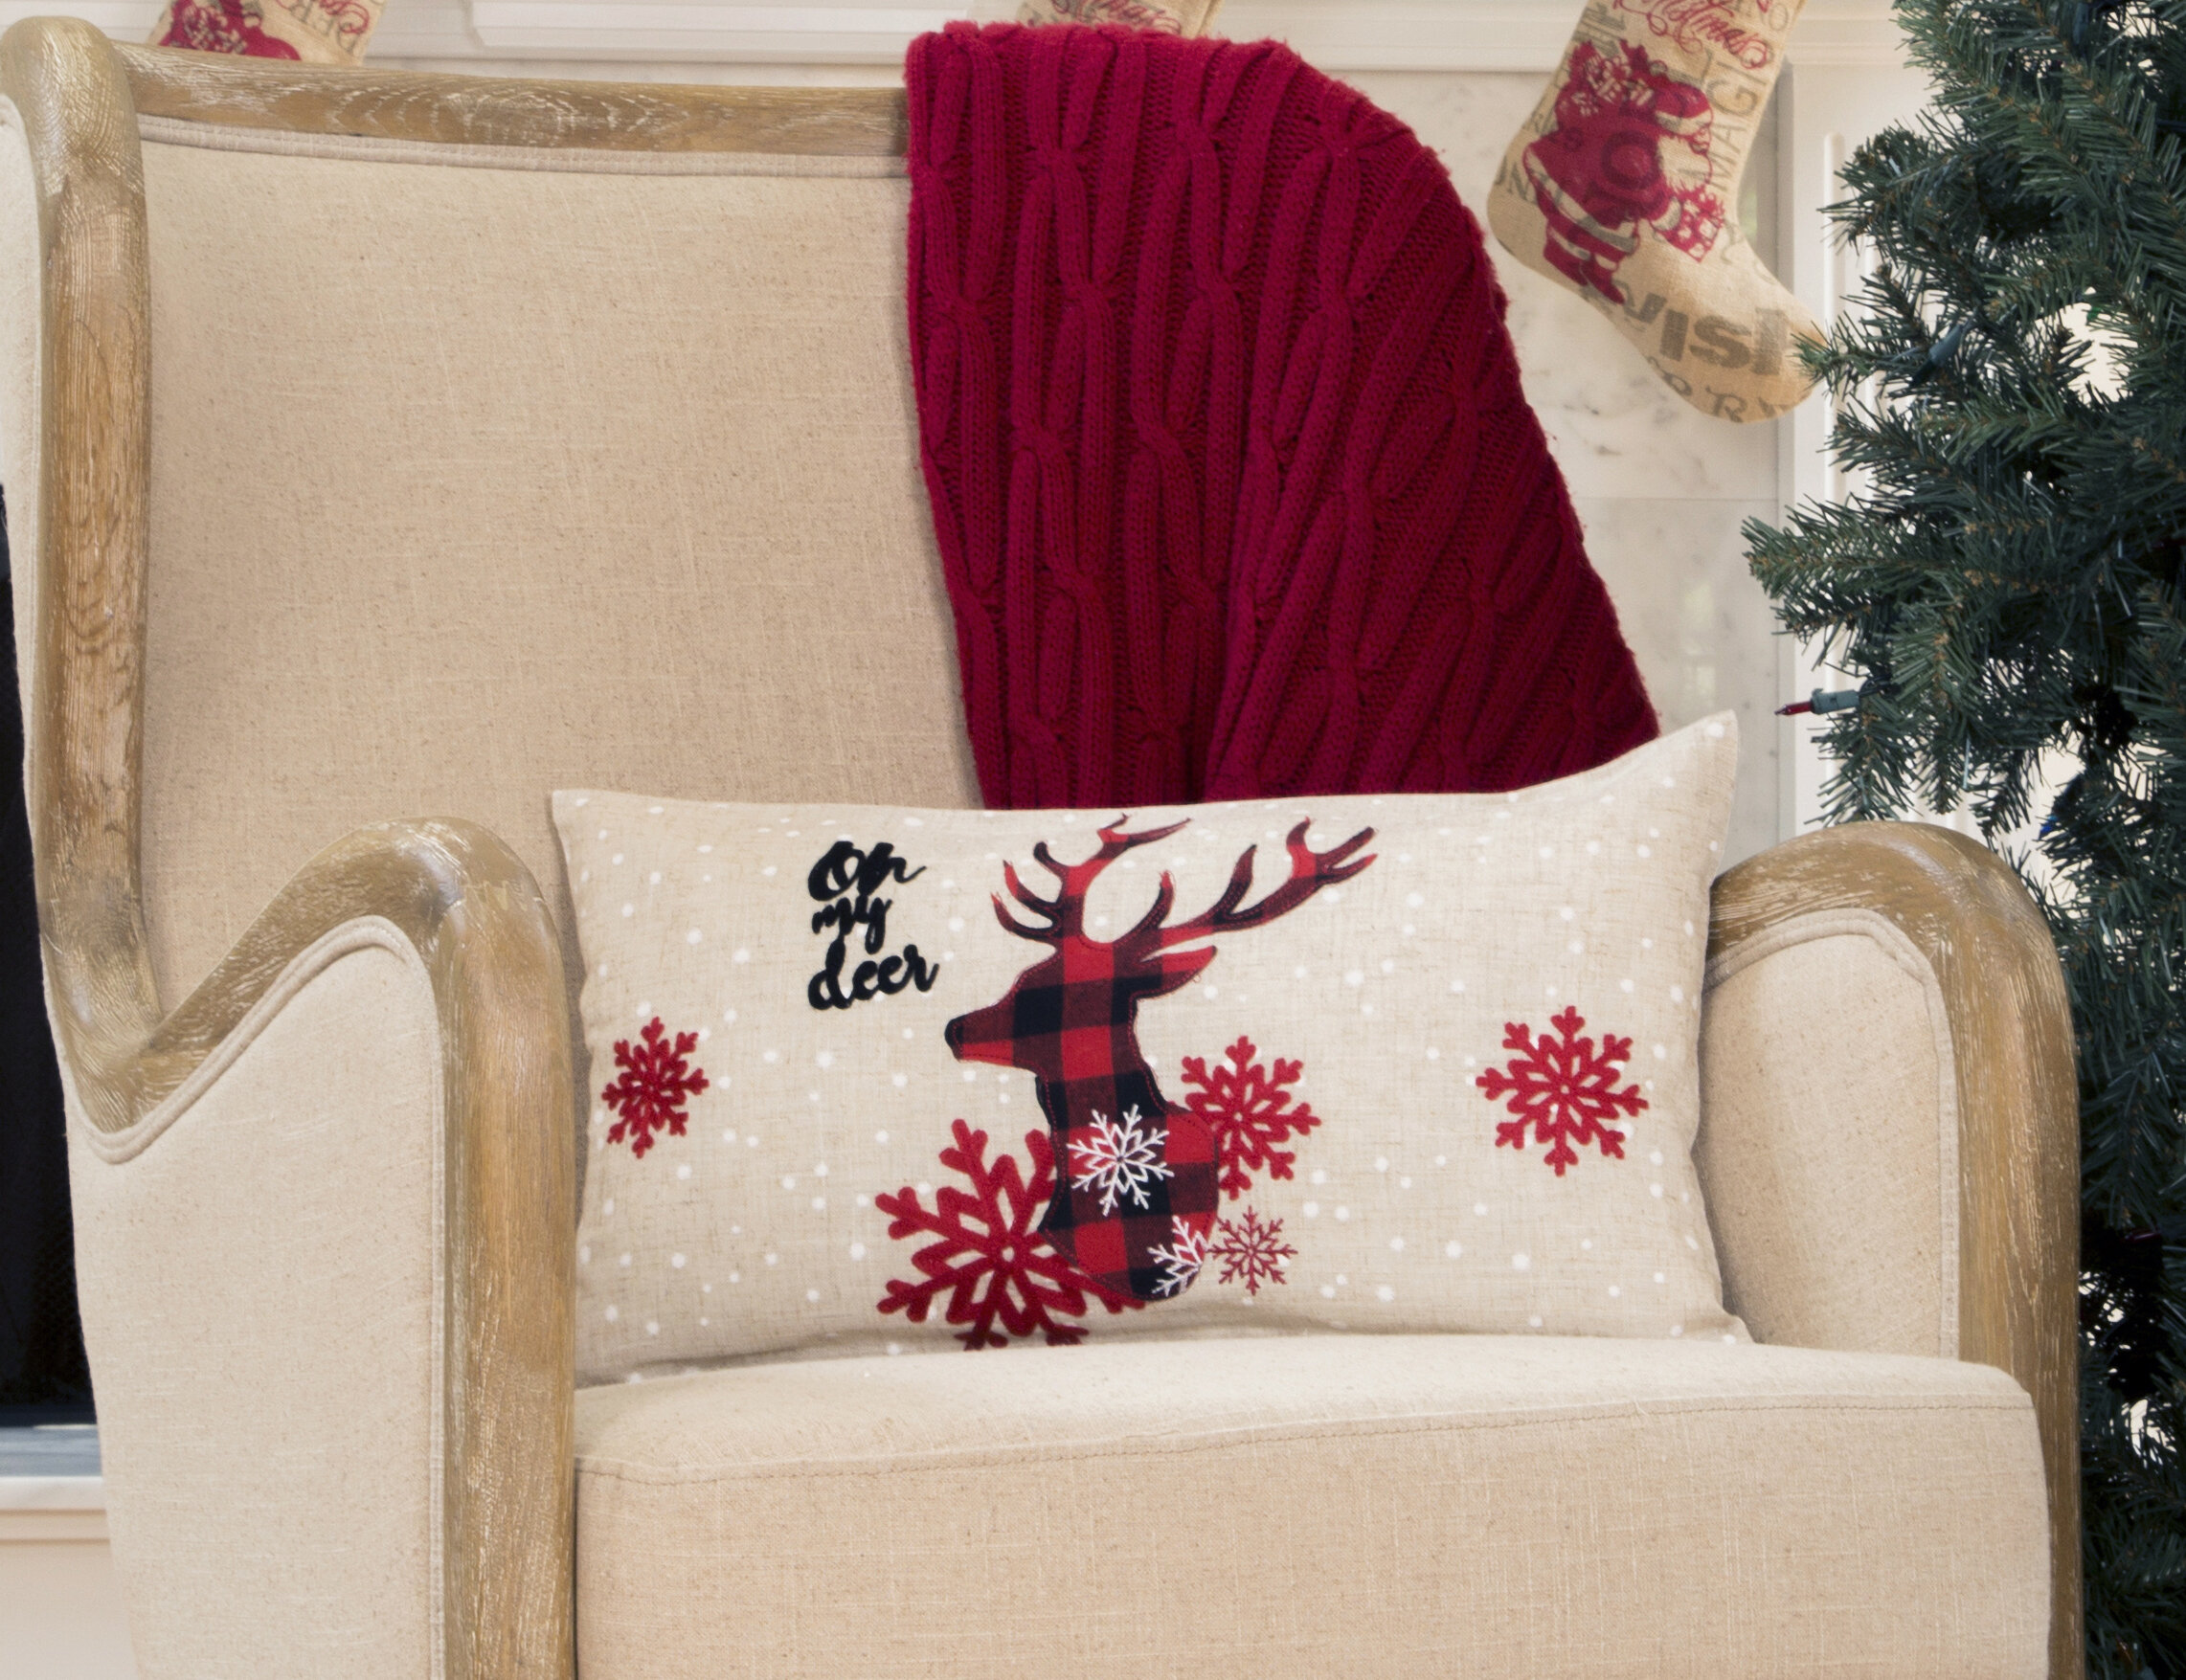 Deer Christmas Pillow, Christmas Pillows, Christmas Decorations